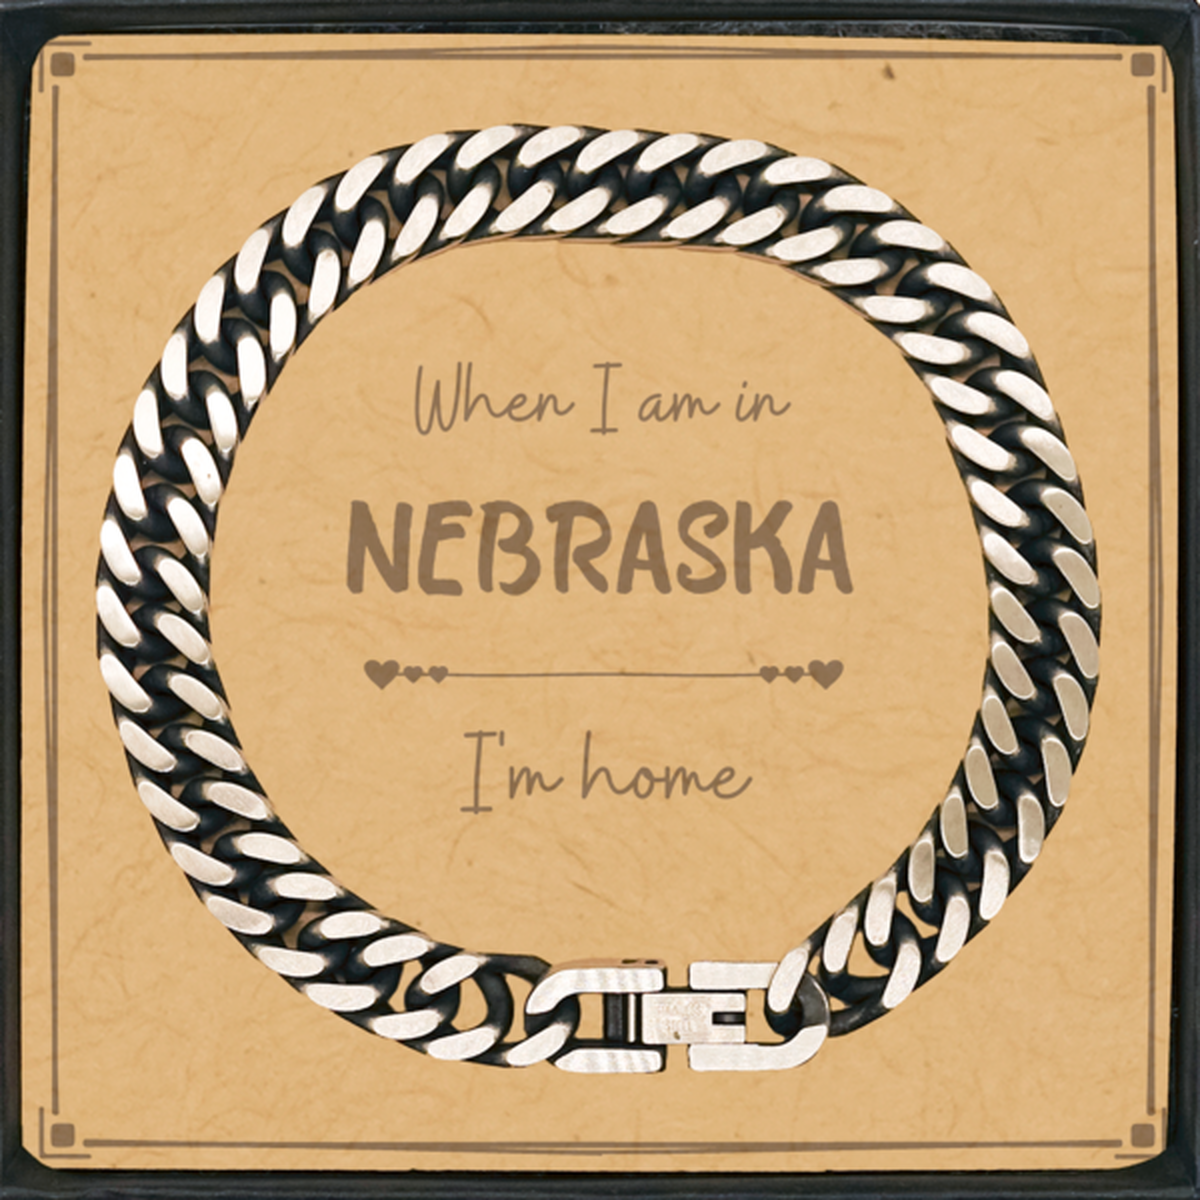 When I am in Nebraska I'm home Cuban Link Chain Bracelet, Message Card Gifts For Nebraska, State Nebraska Birthday Gifts for Friends Coworker